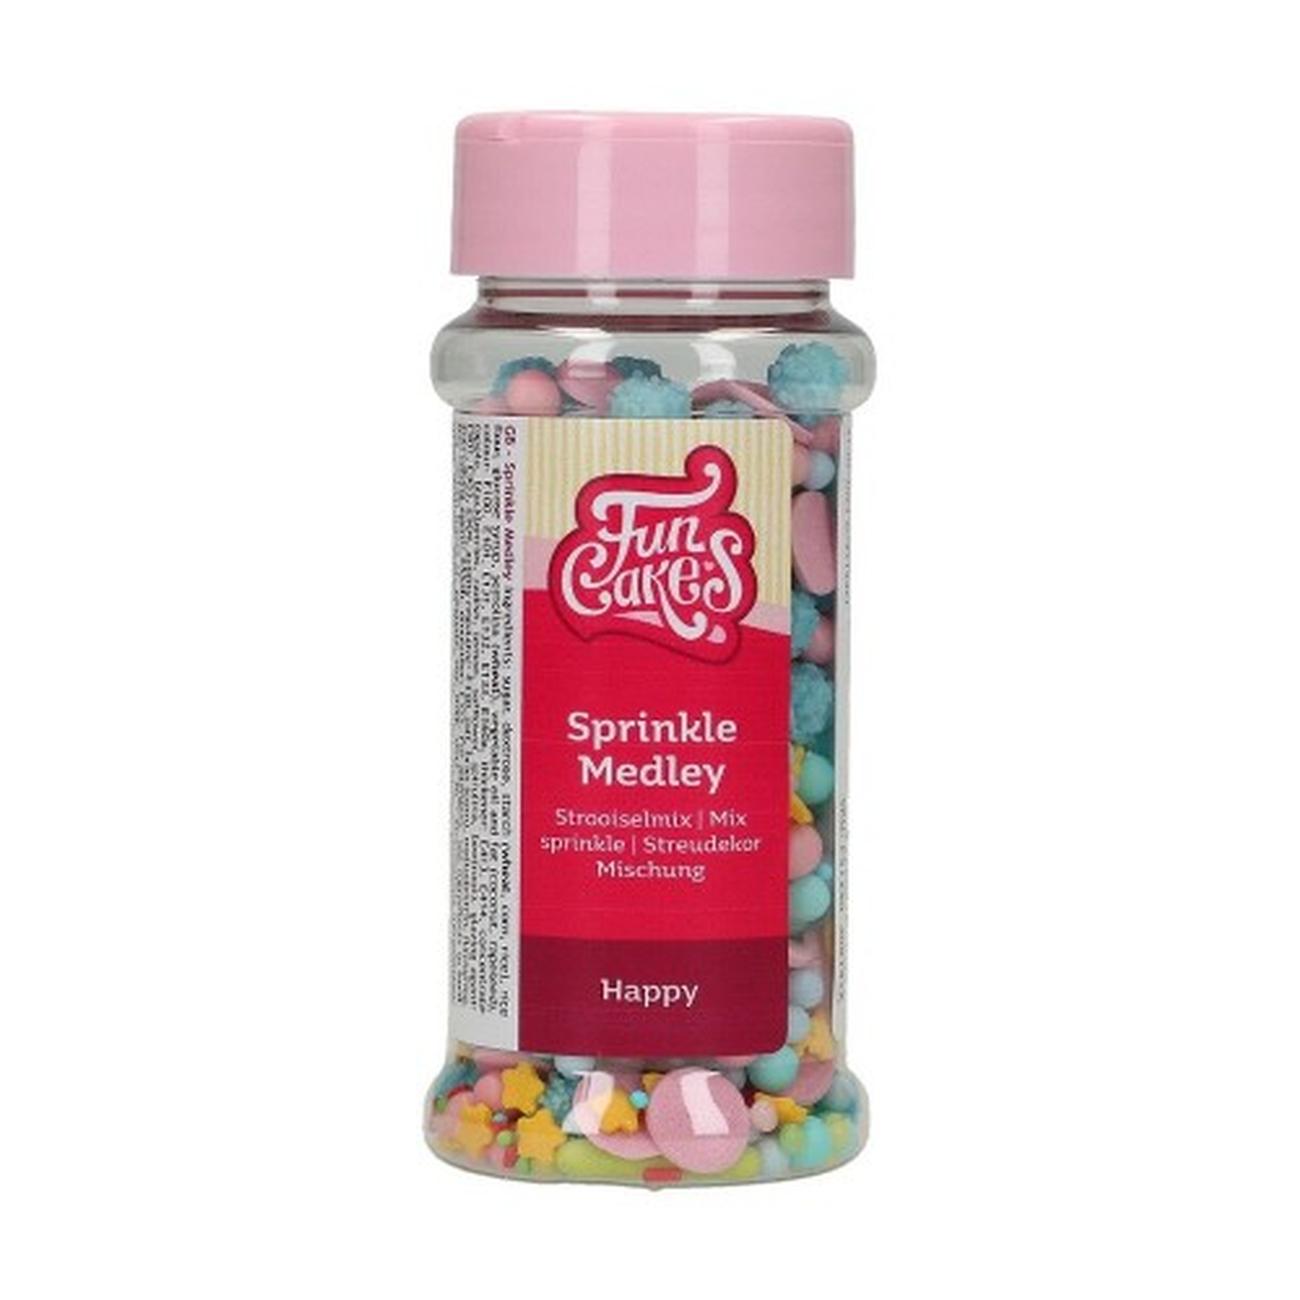 fun-cakes-edible-sprinkles-medley-happy-65g - FunCakes Edible Sprinkles Medley Happy 65g